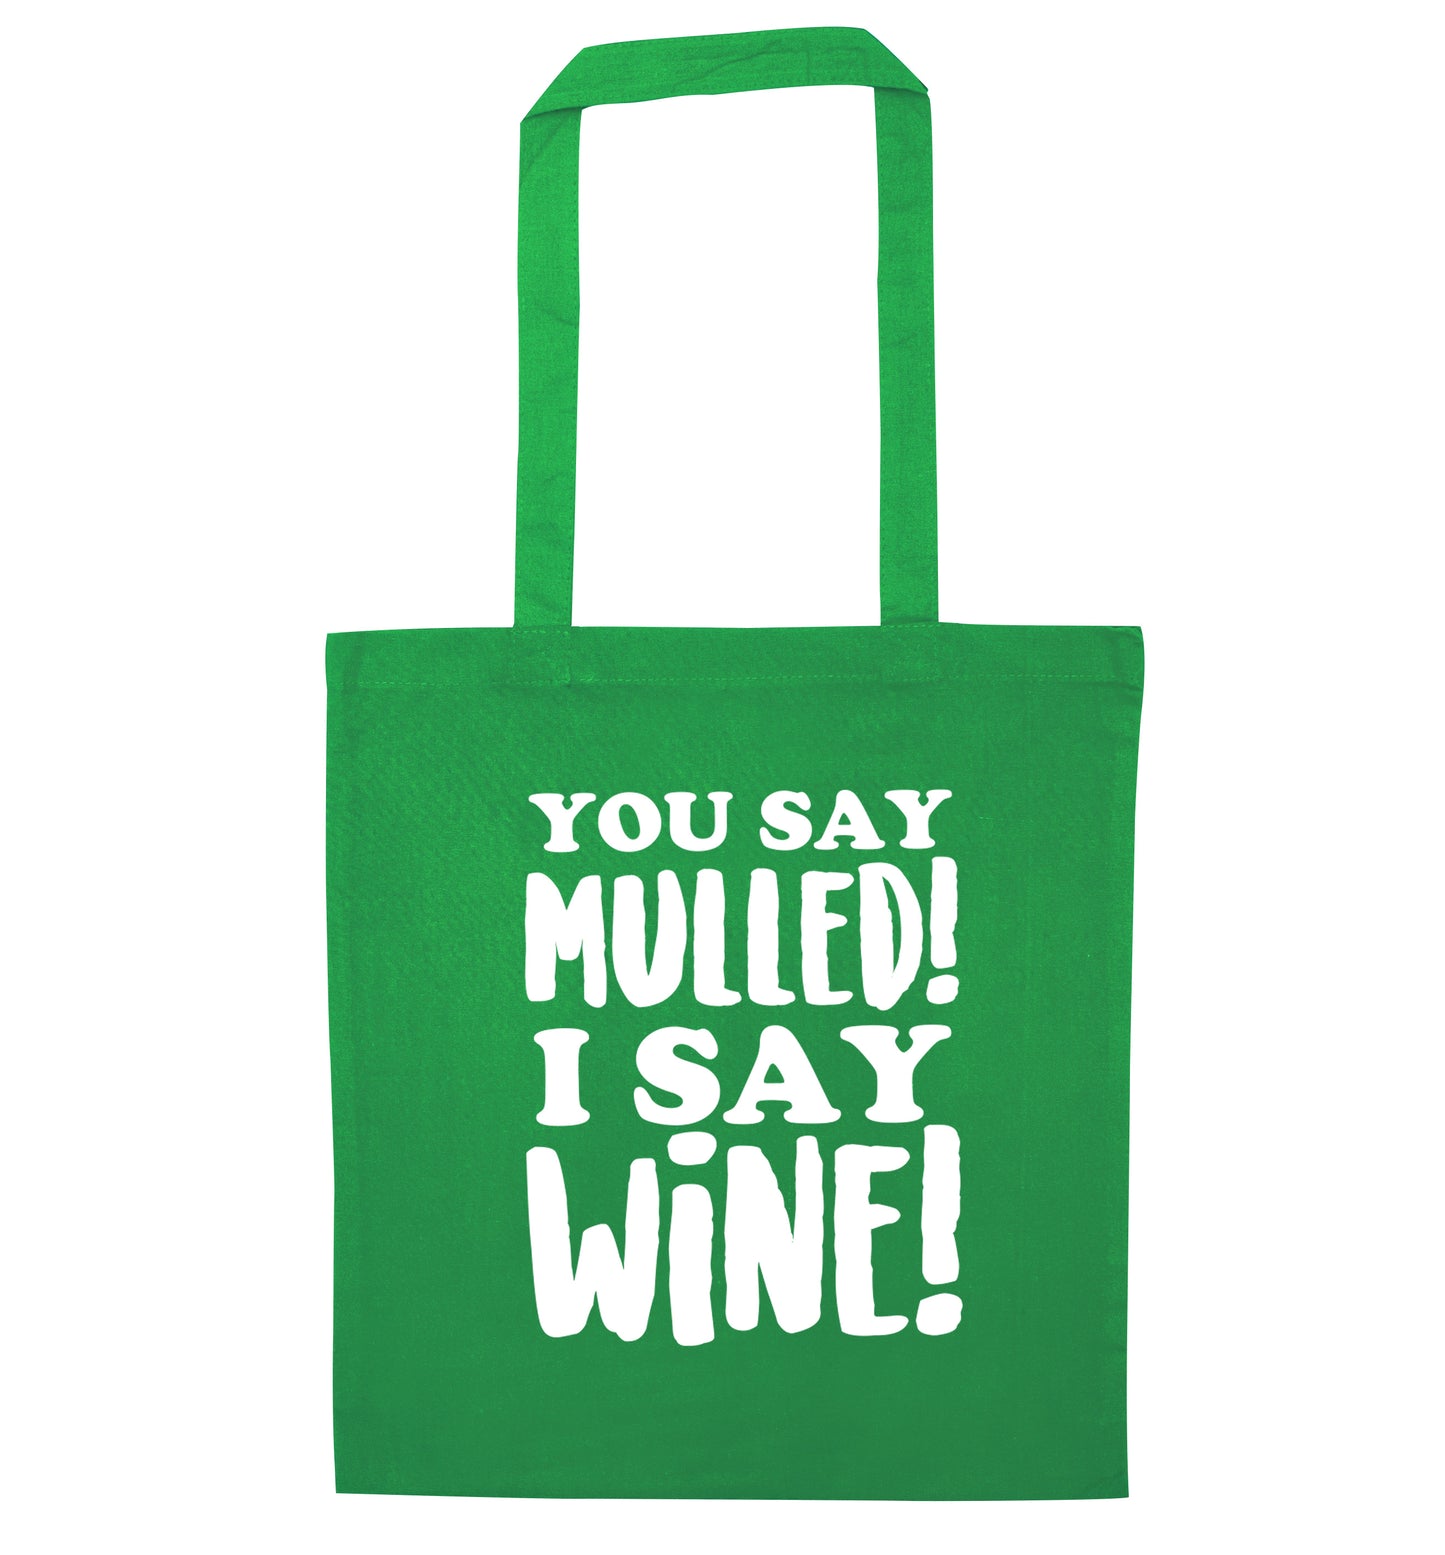 You say mulled I say wine! green tote bag